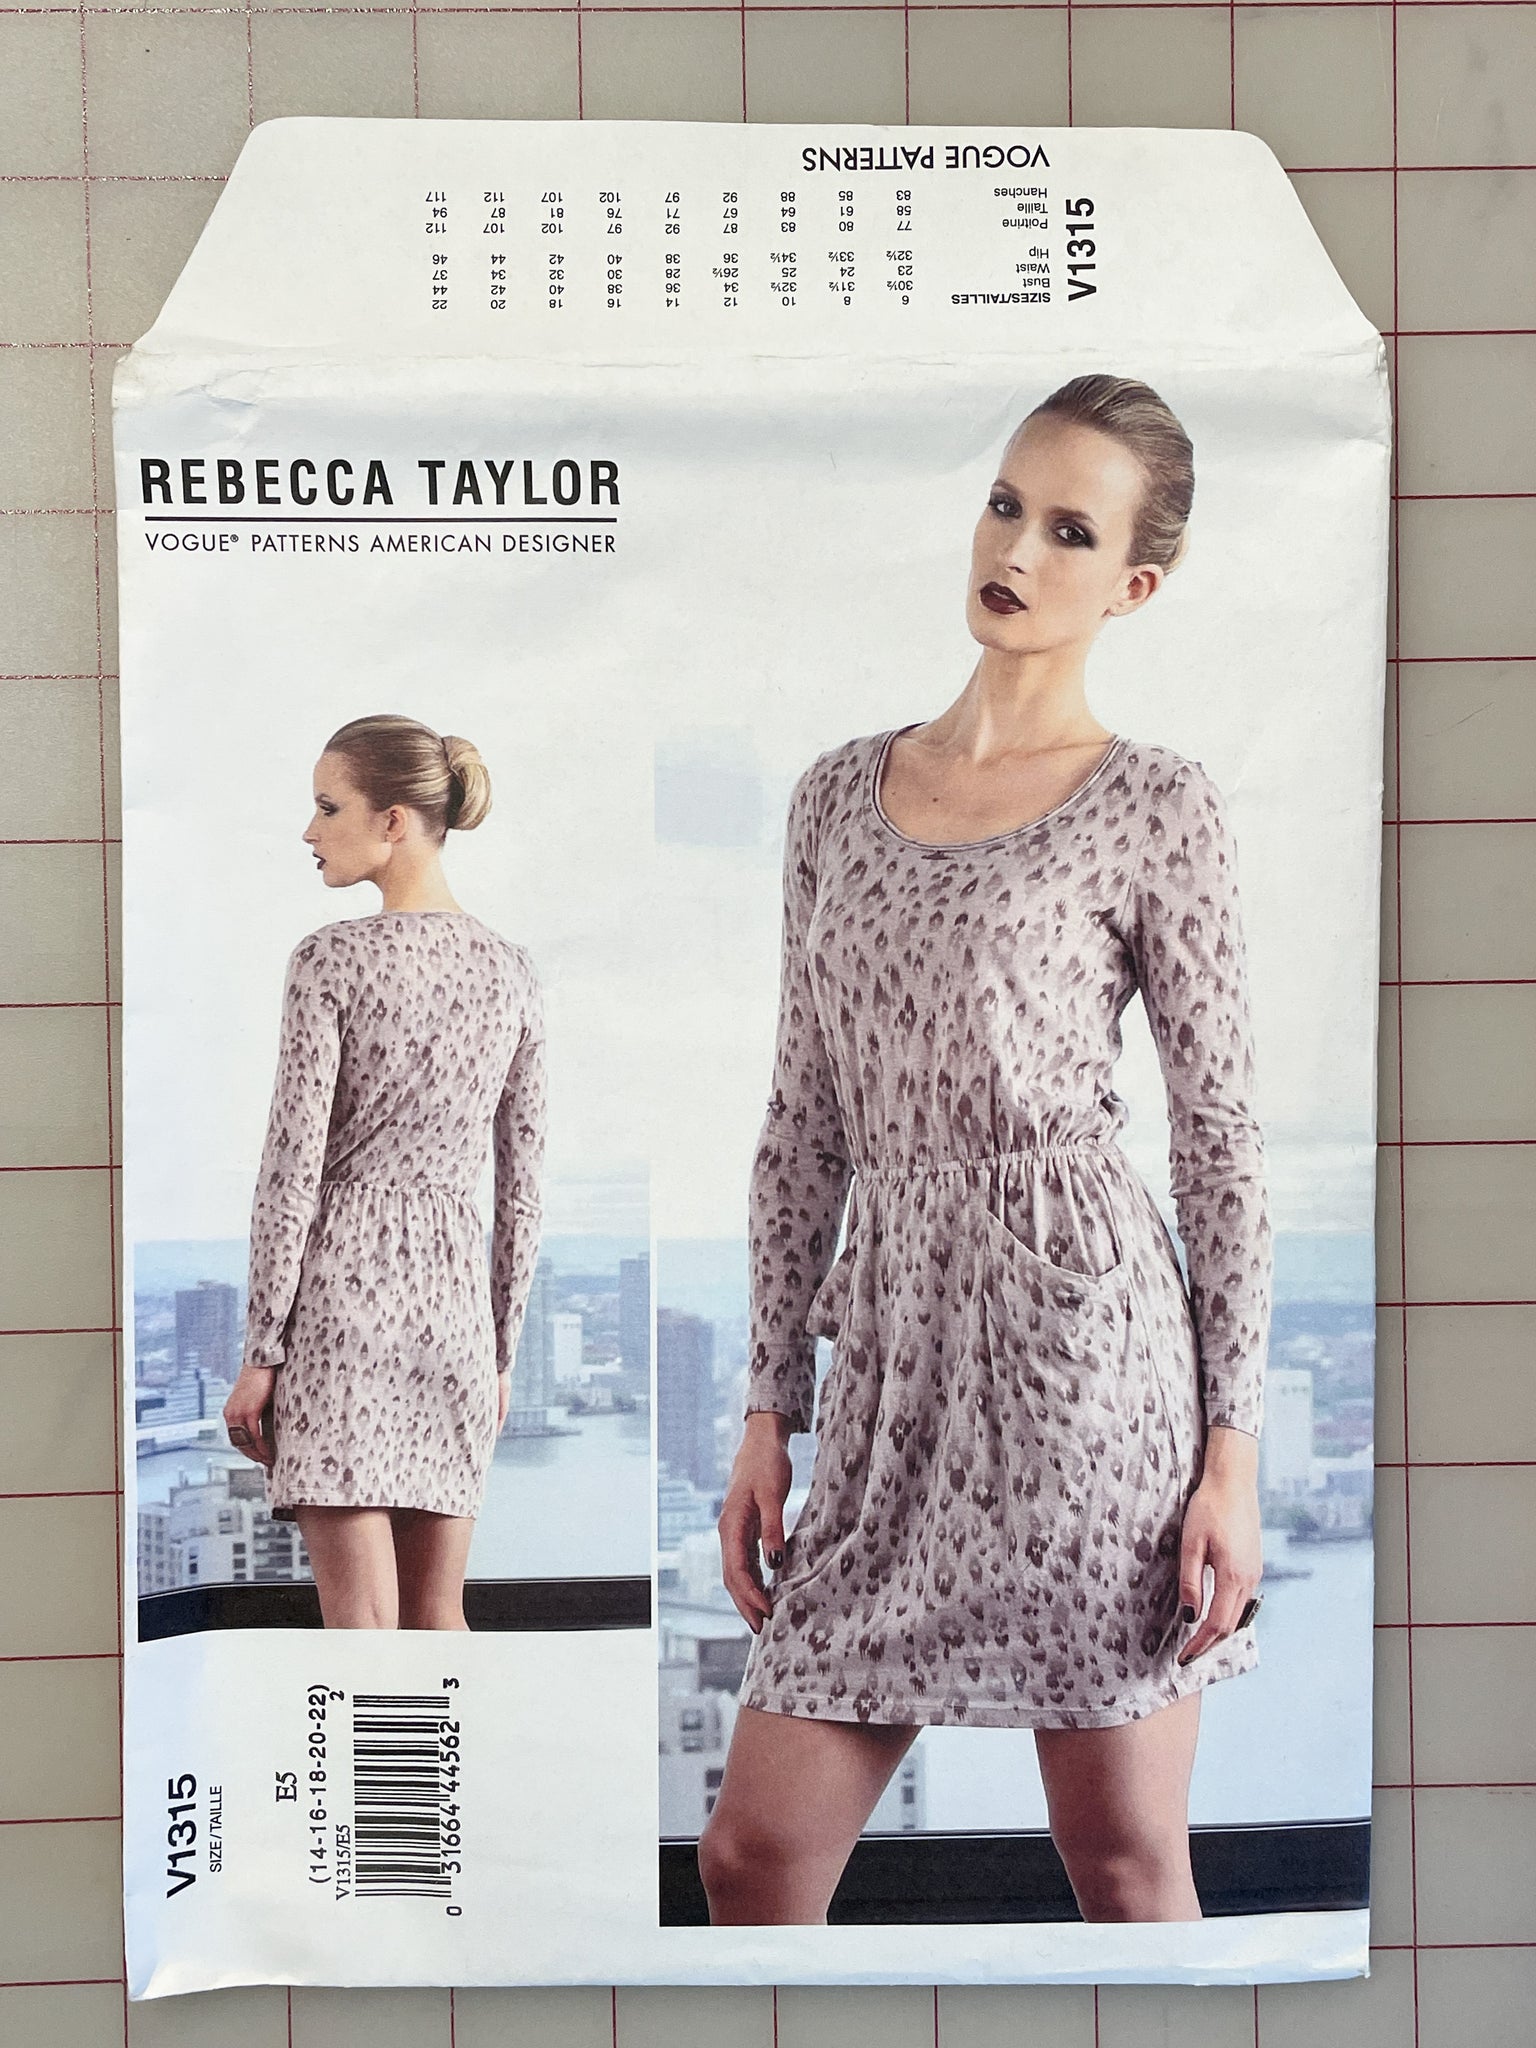 SALE 2012 Vogue 1315 Pattern - Dress FACTORY FOLDED